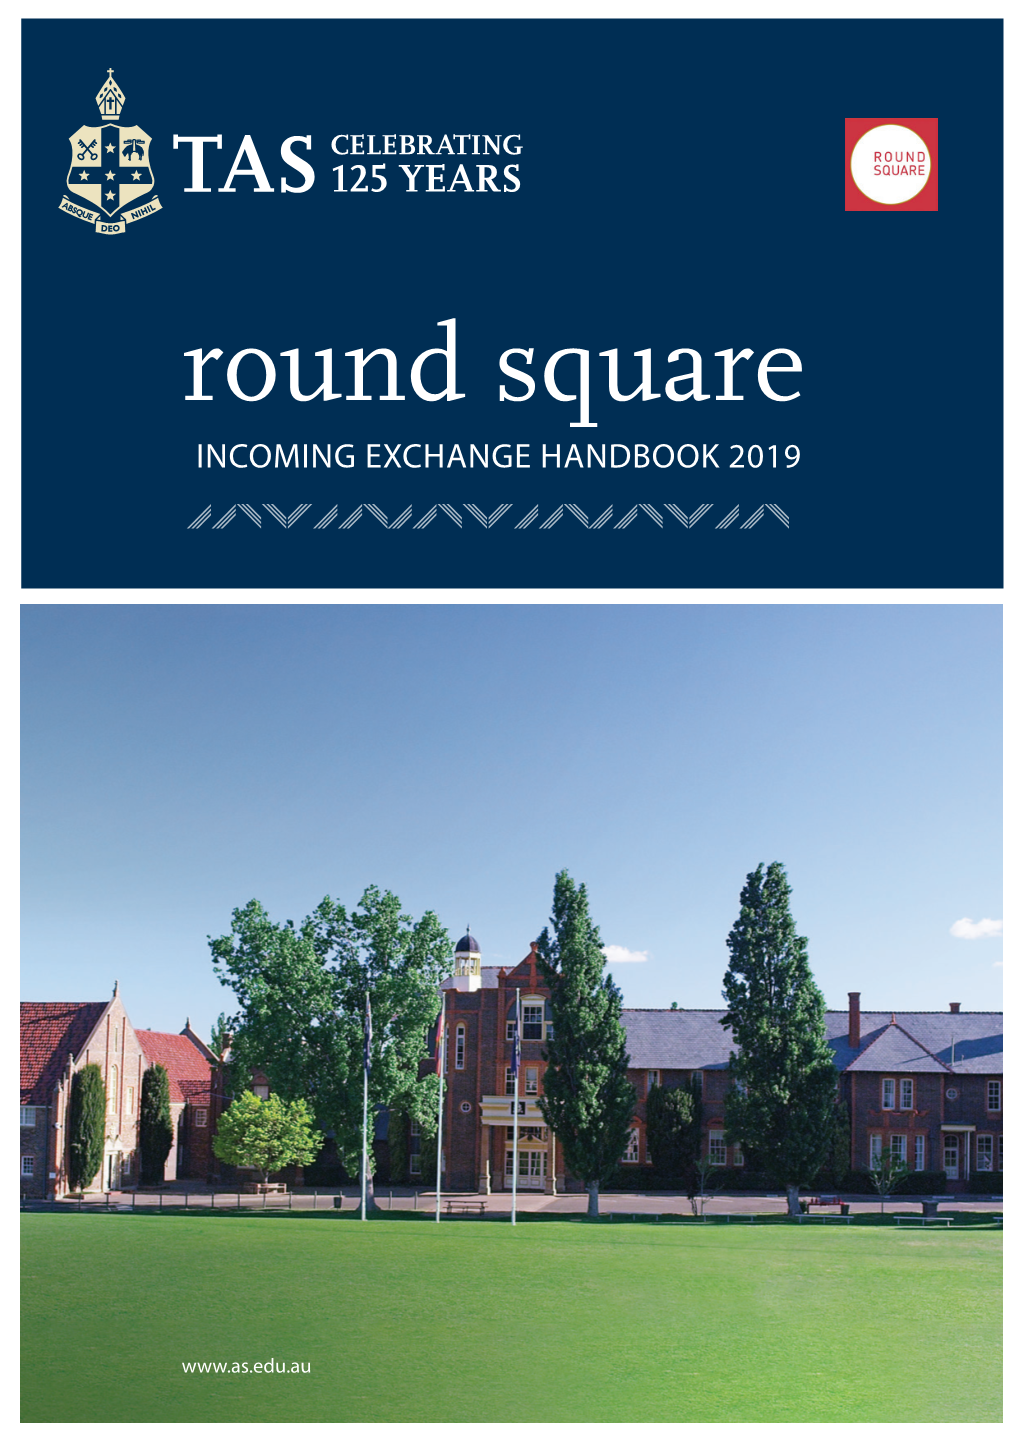 Round Square INCOMING EXCHANGE HANDBOOK 2019